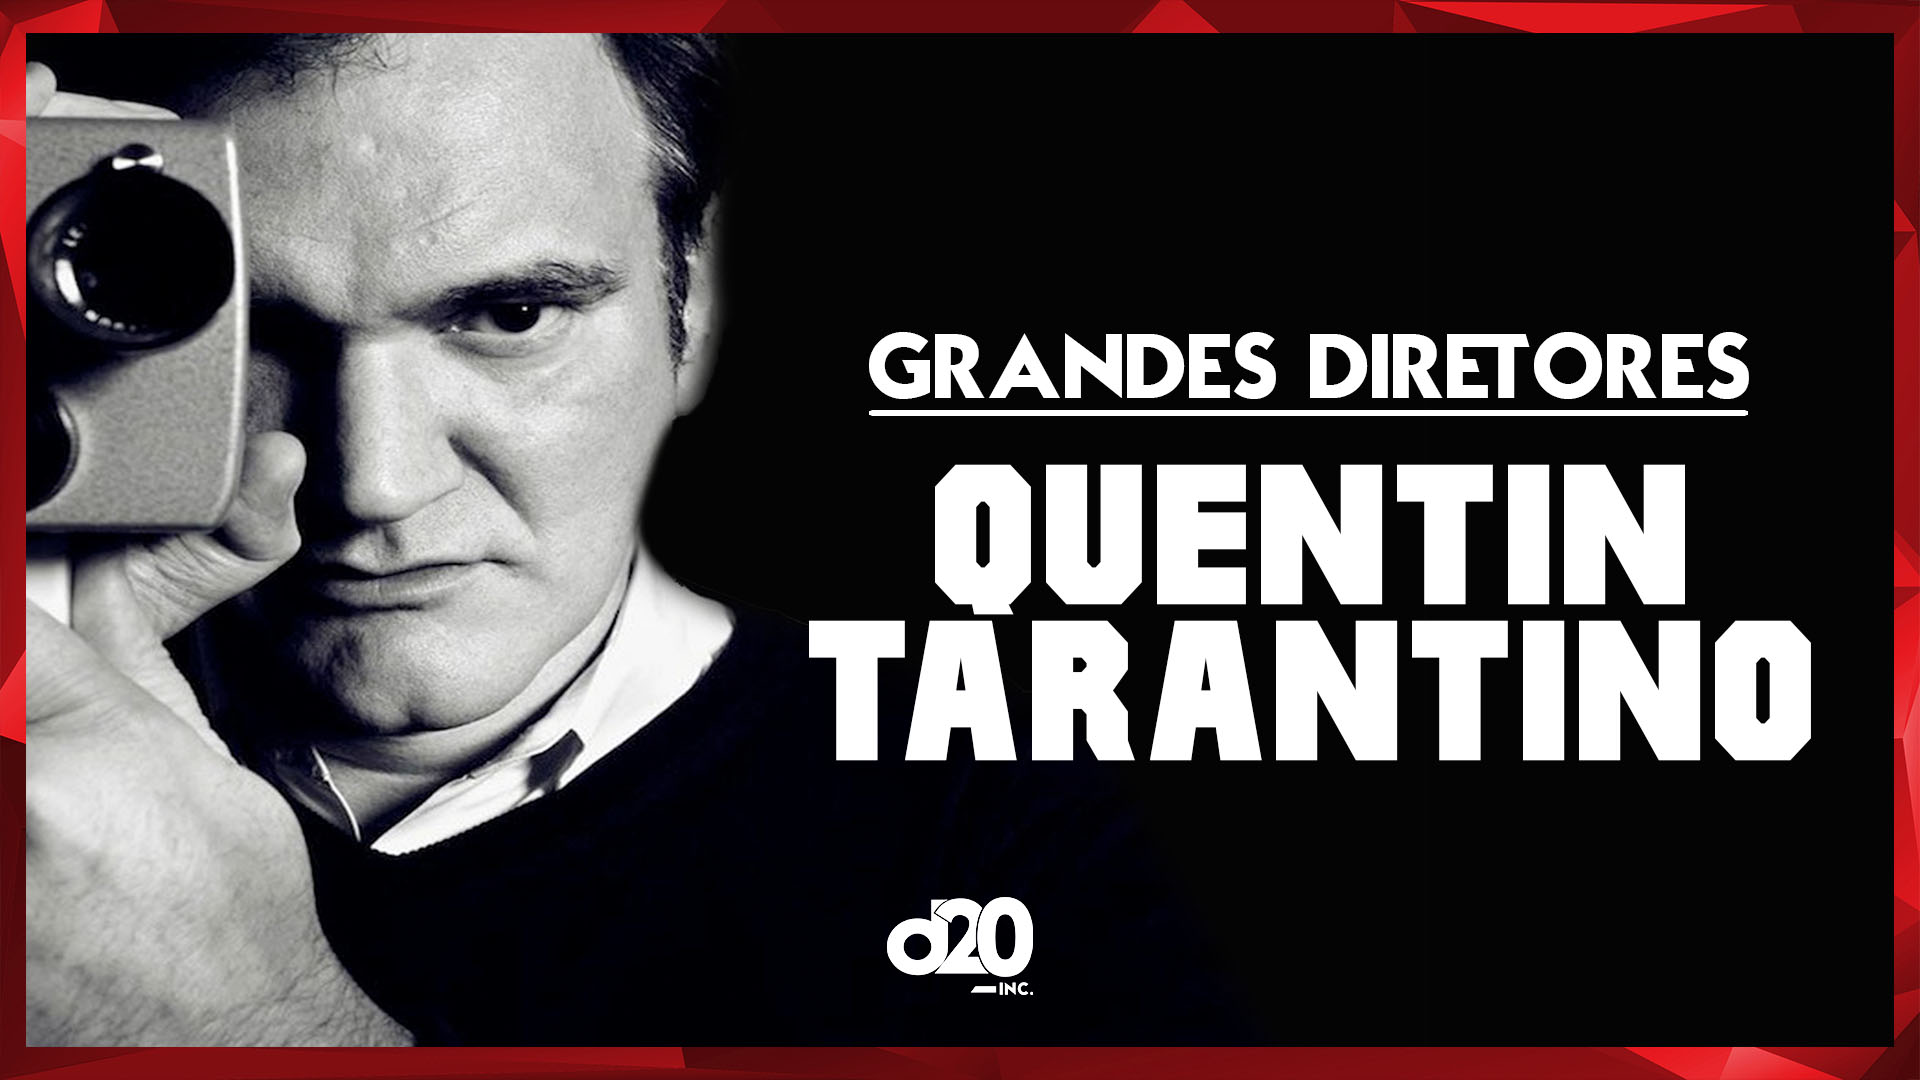 Quentin Tarantino (Grandes Diretores) | D20 Lab 54